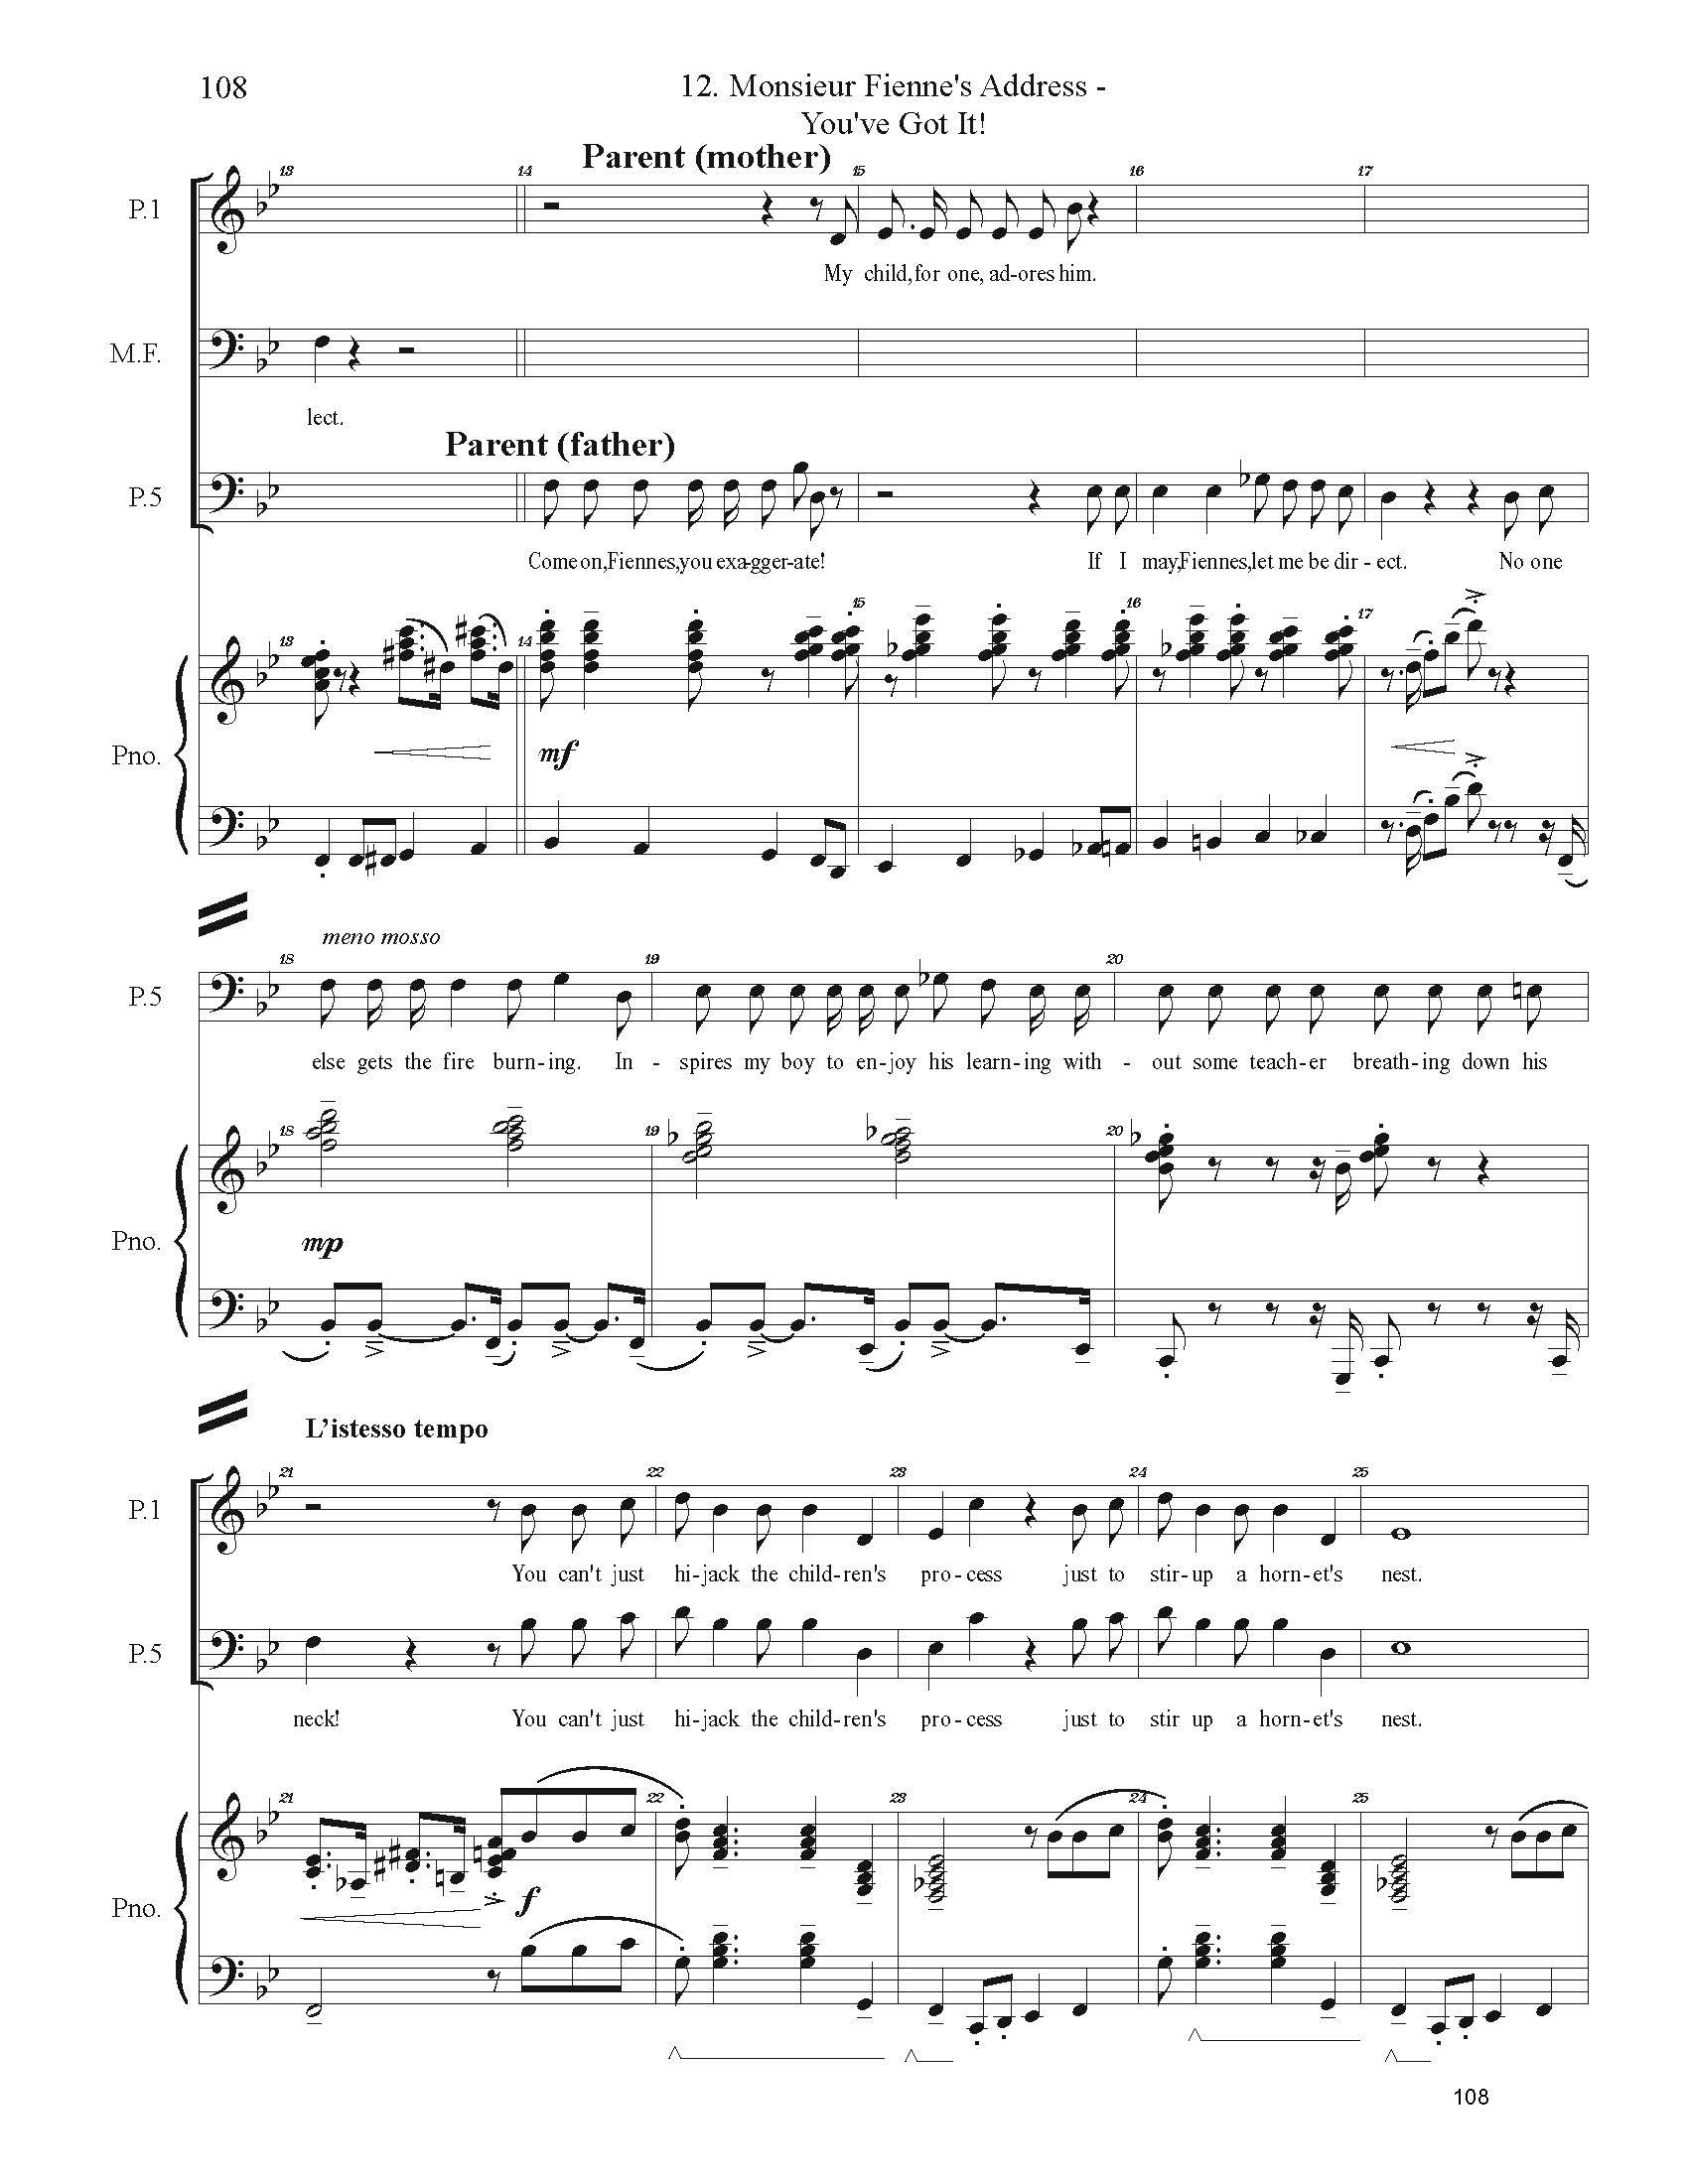 FULL PIANO VOCAL SCORE DRAFT 1 - Score_Page_108.jpg